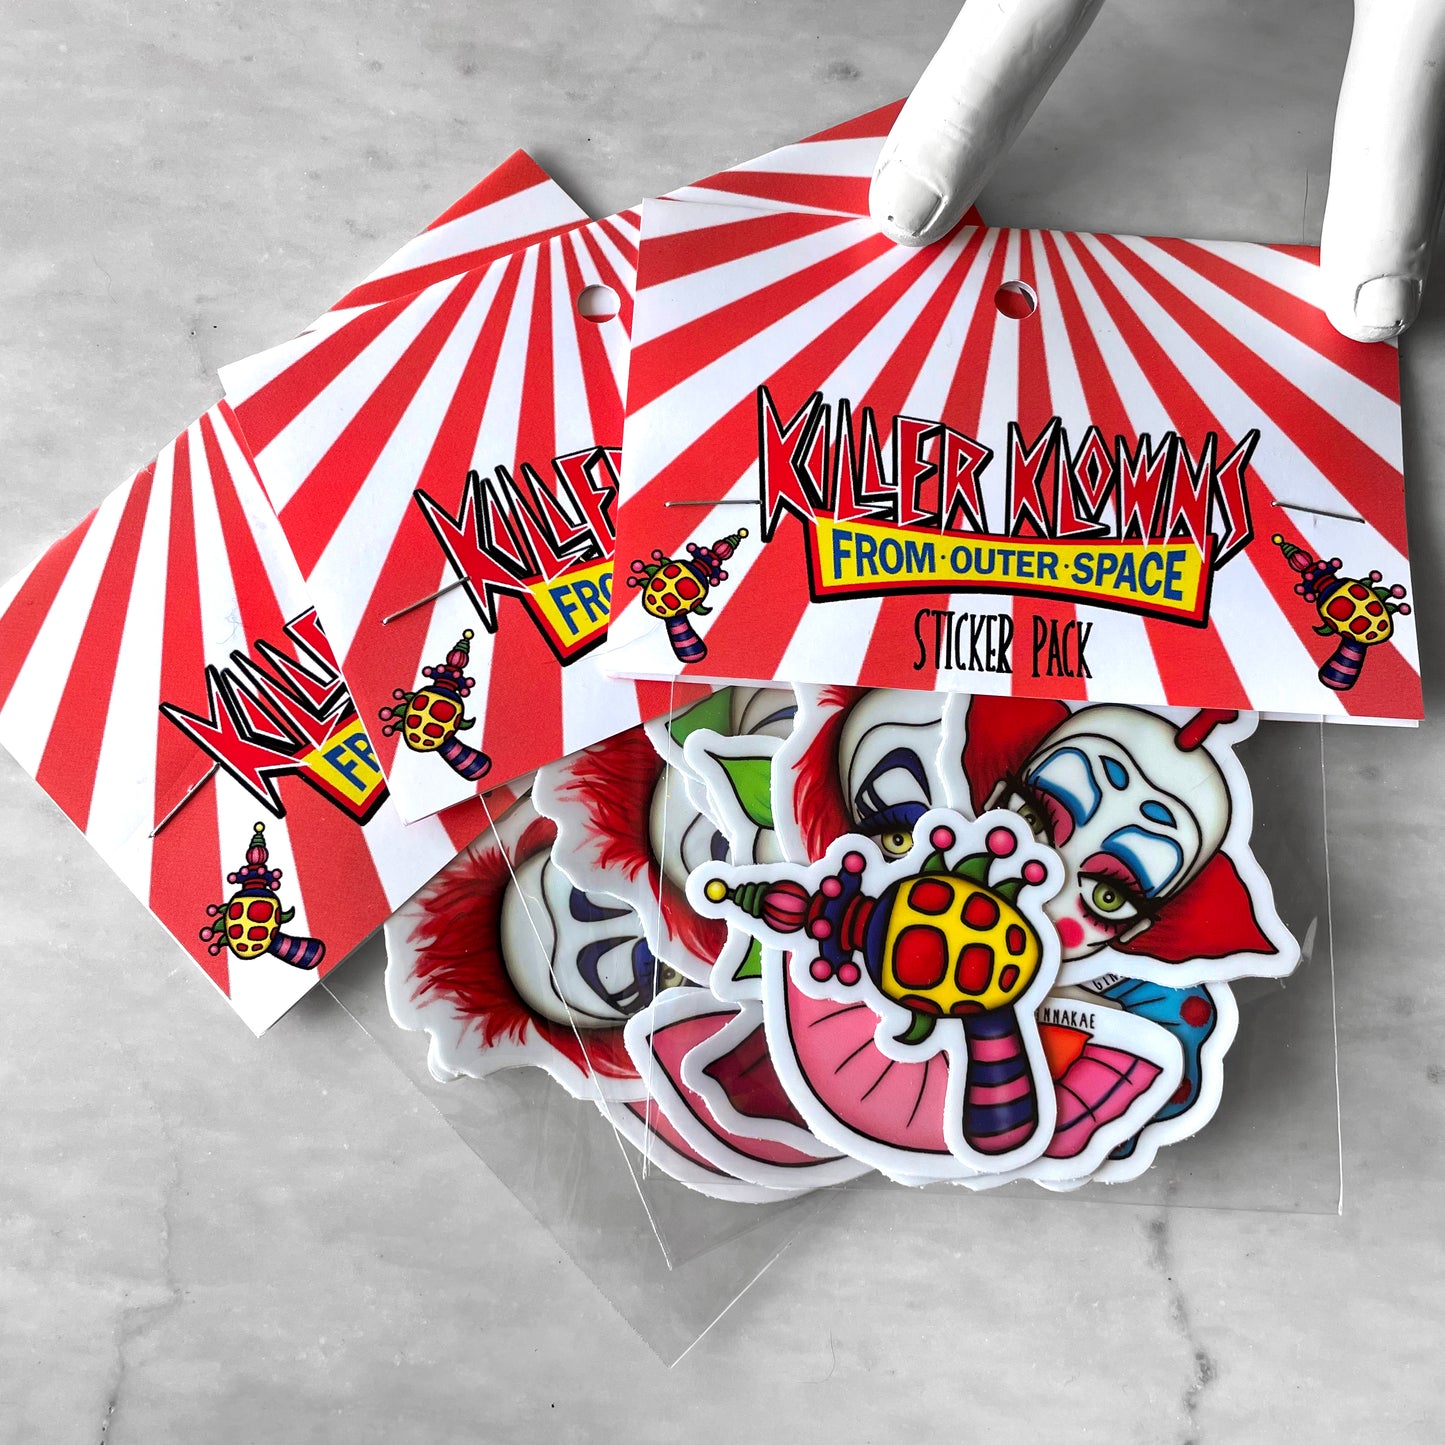 Killer Klown Babes Sticker Pack